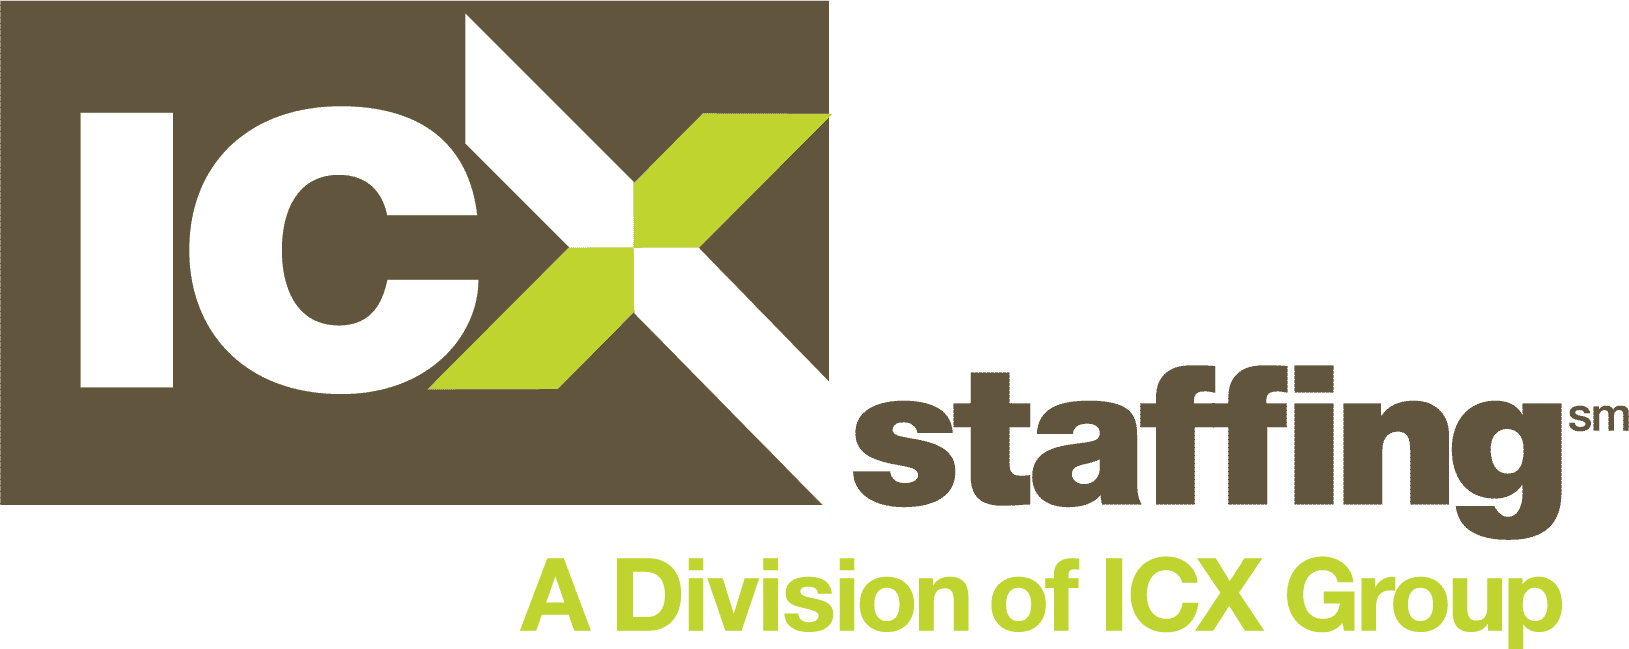 ICX Staffing Logo